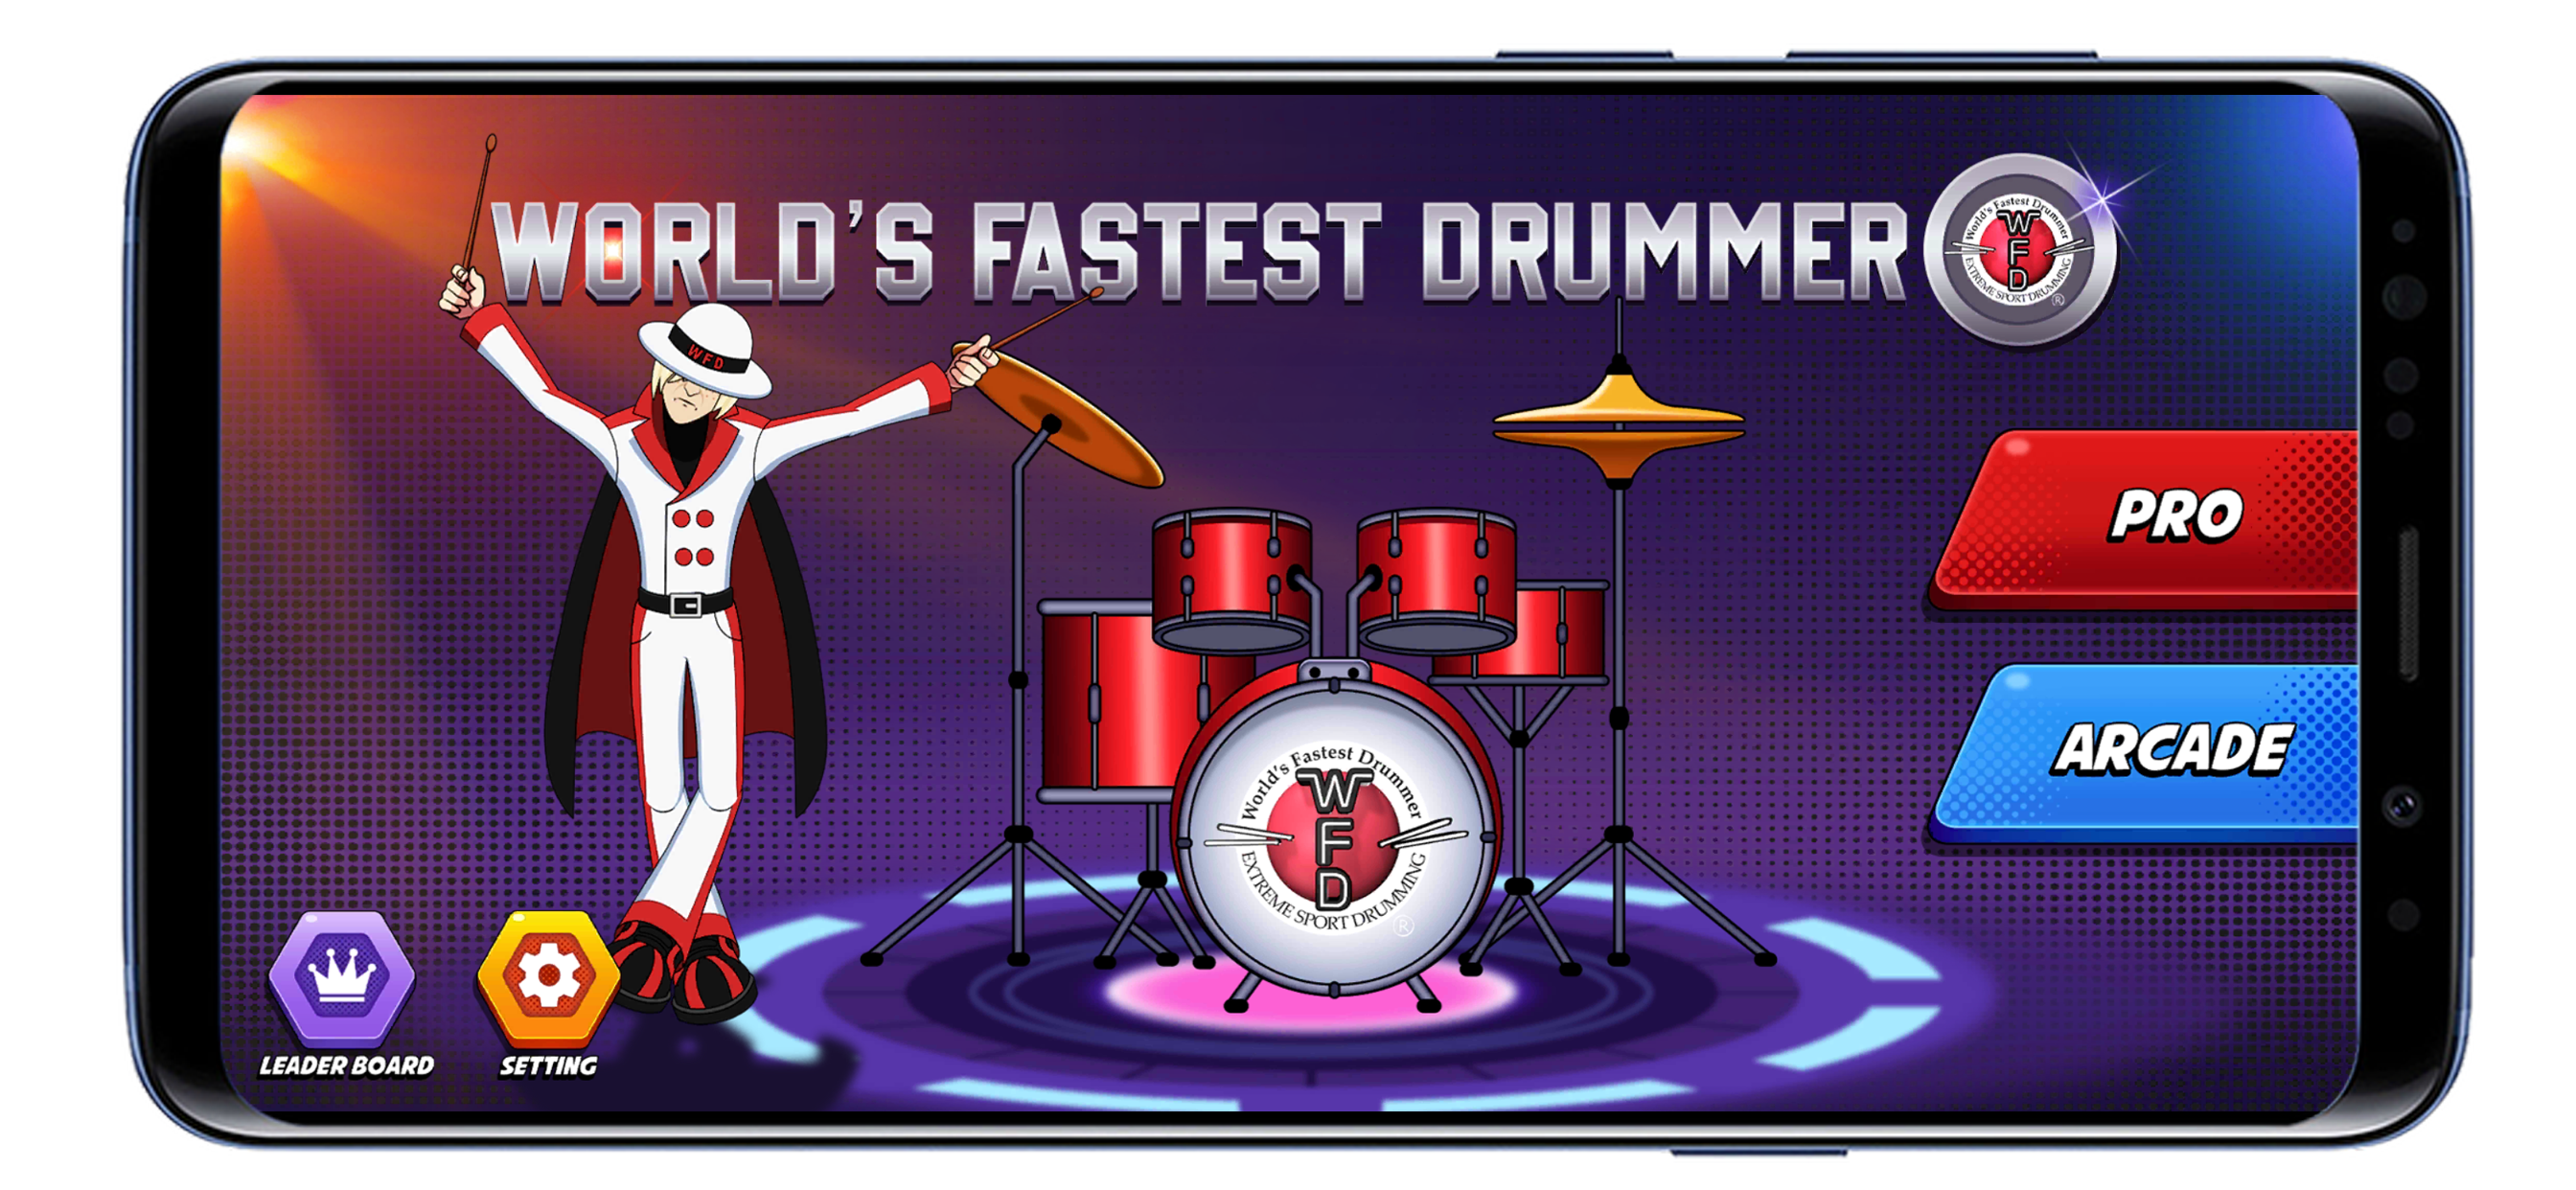 World's Fastest Drummer on Mobile